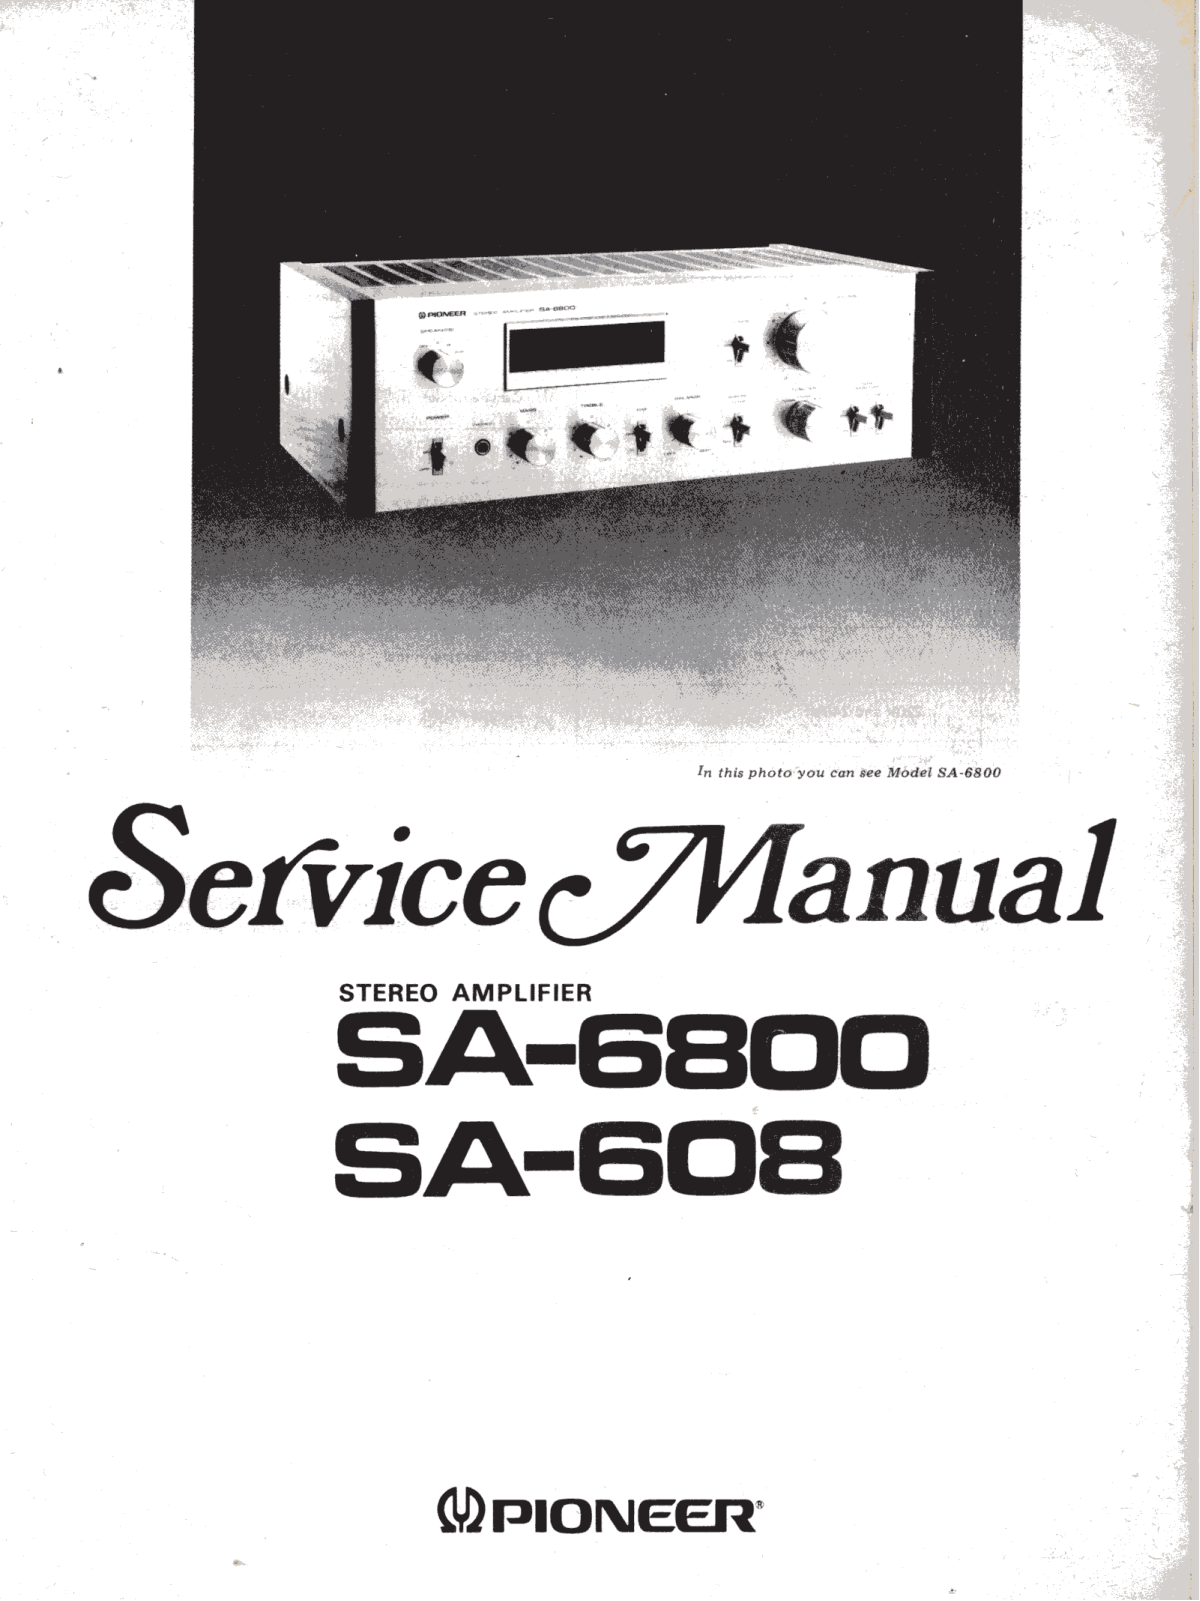 Pioneer SA-608 Schematic